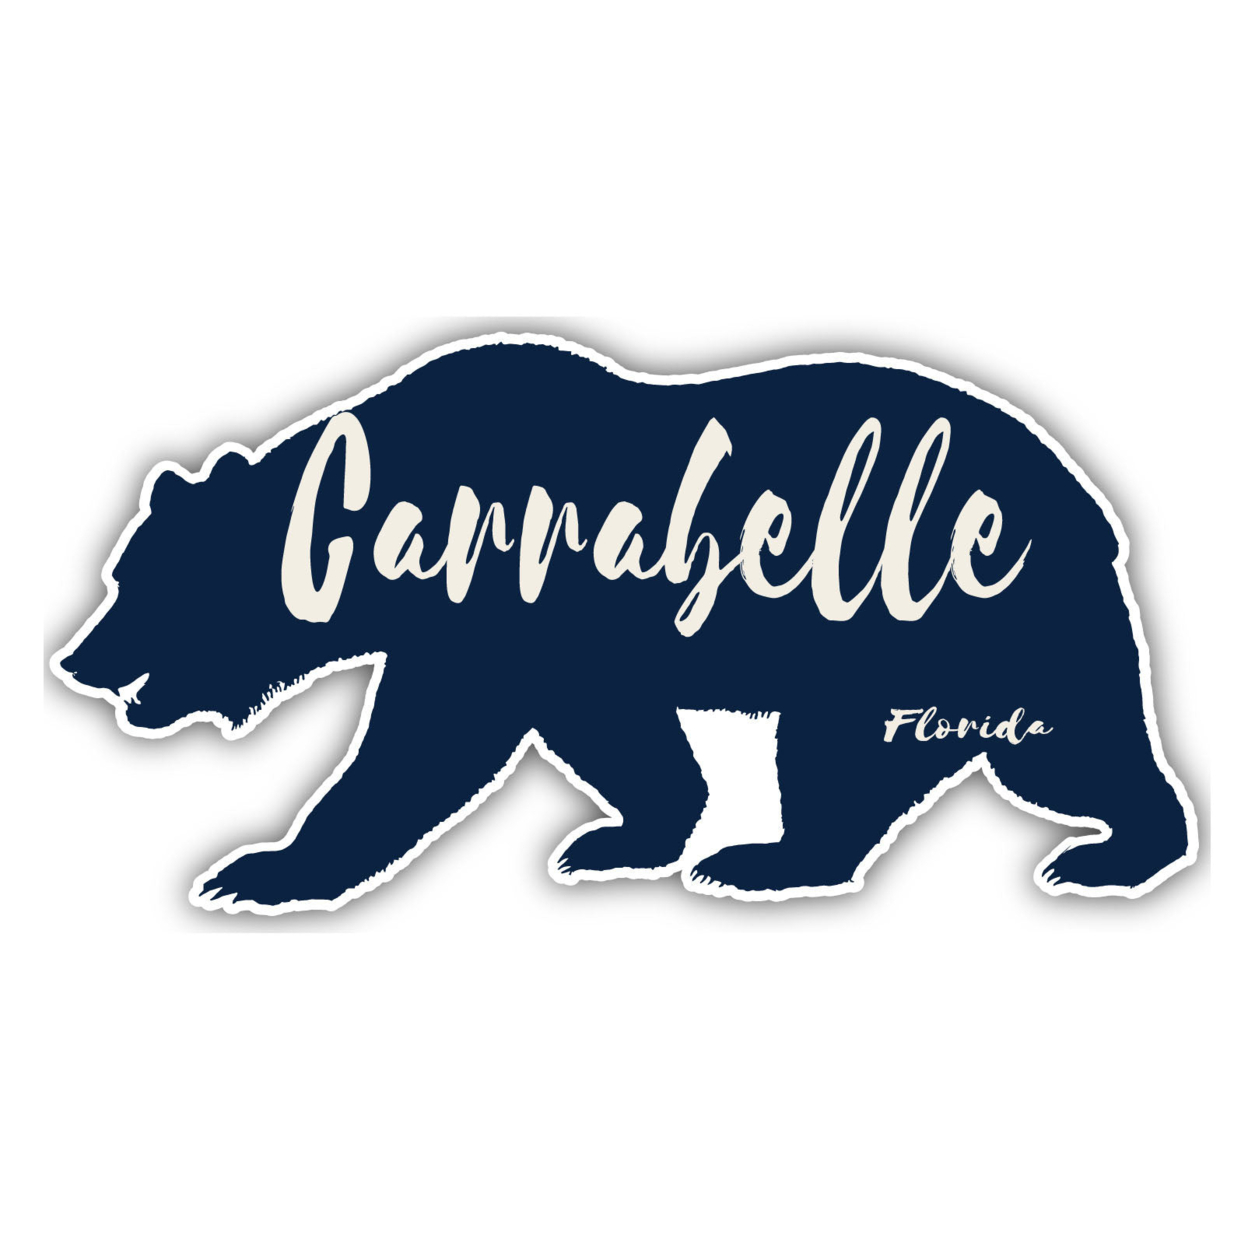 Carrabelle Florida Souvenir Decorative Stickers (Choose Theme And Size) - 4-Pack, 2-Inch, Bear